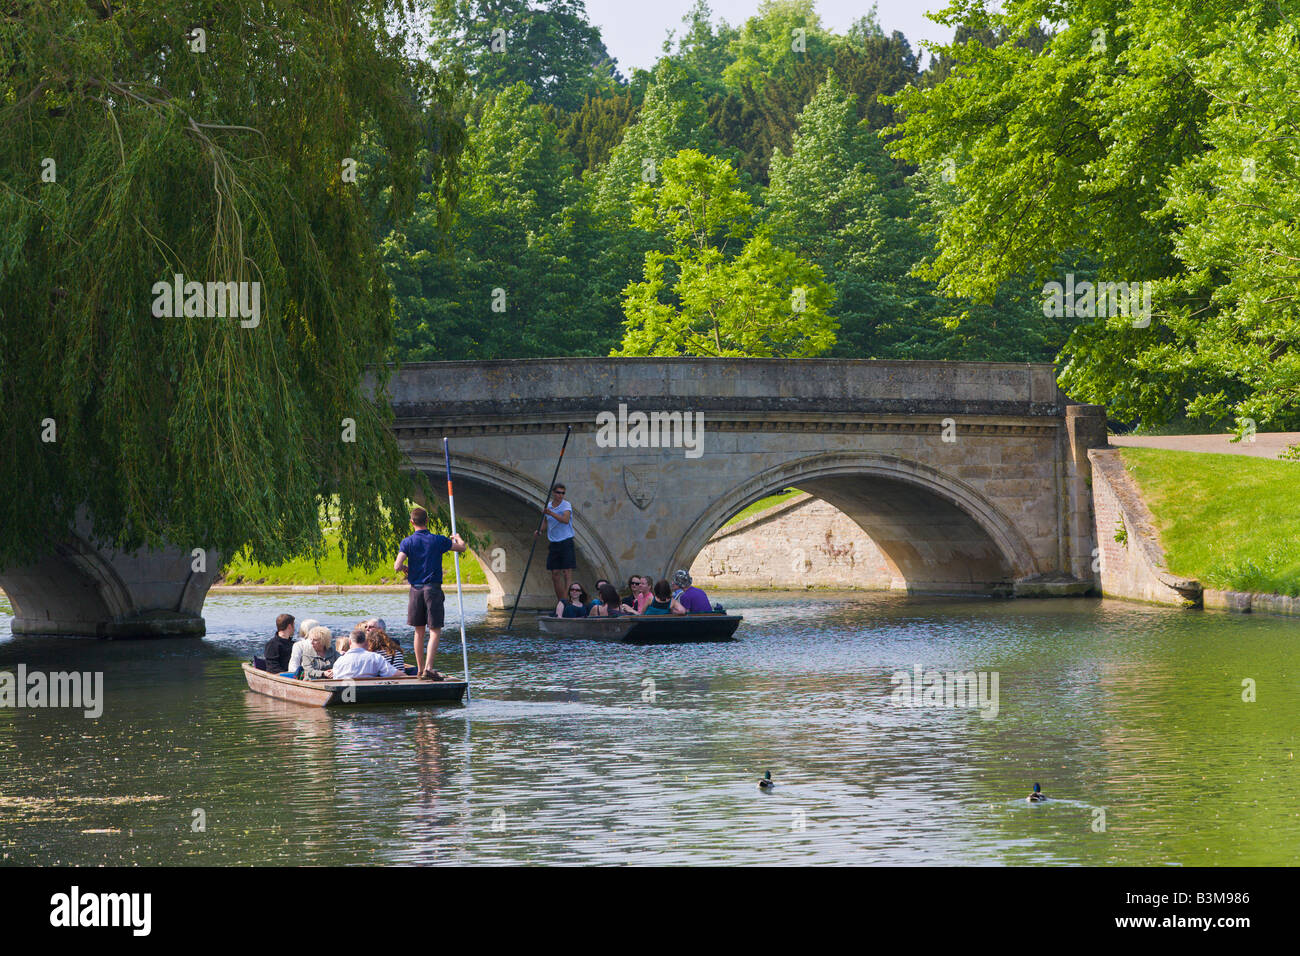 Barques sur la rivière Cam, Trinity Bridge, Cambridge, Angleterre Banque D'Images